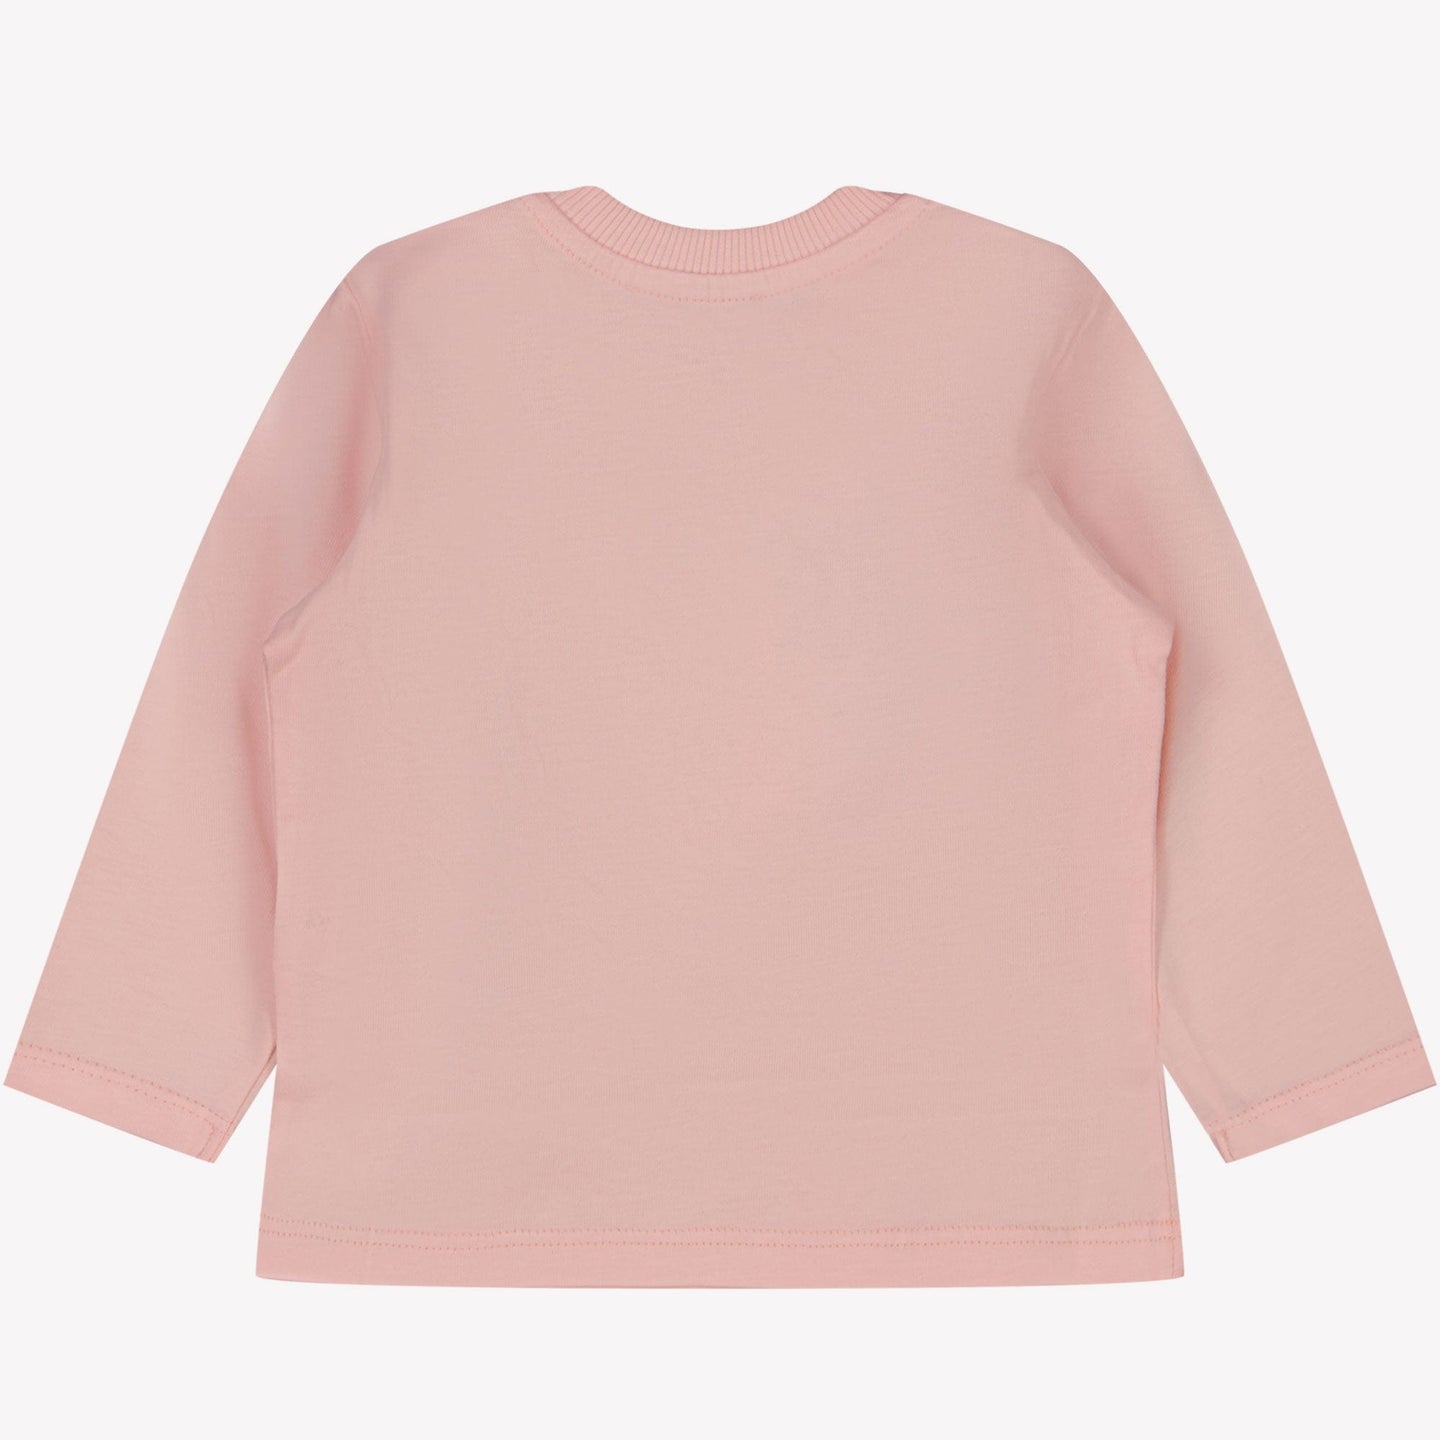 Moschino Baby Unisex T-shirt Licht Roze 3/6